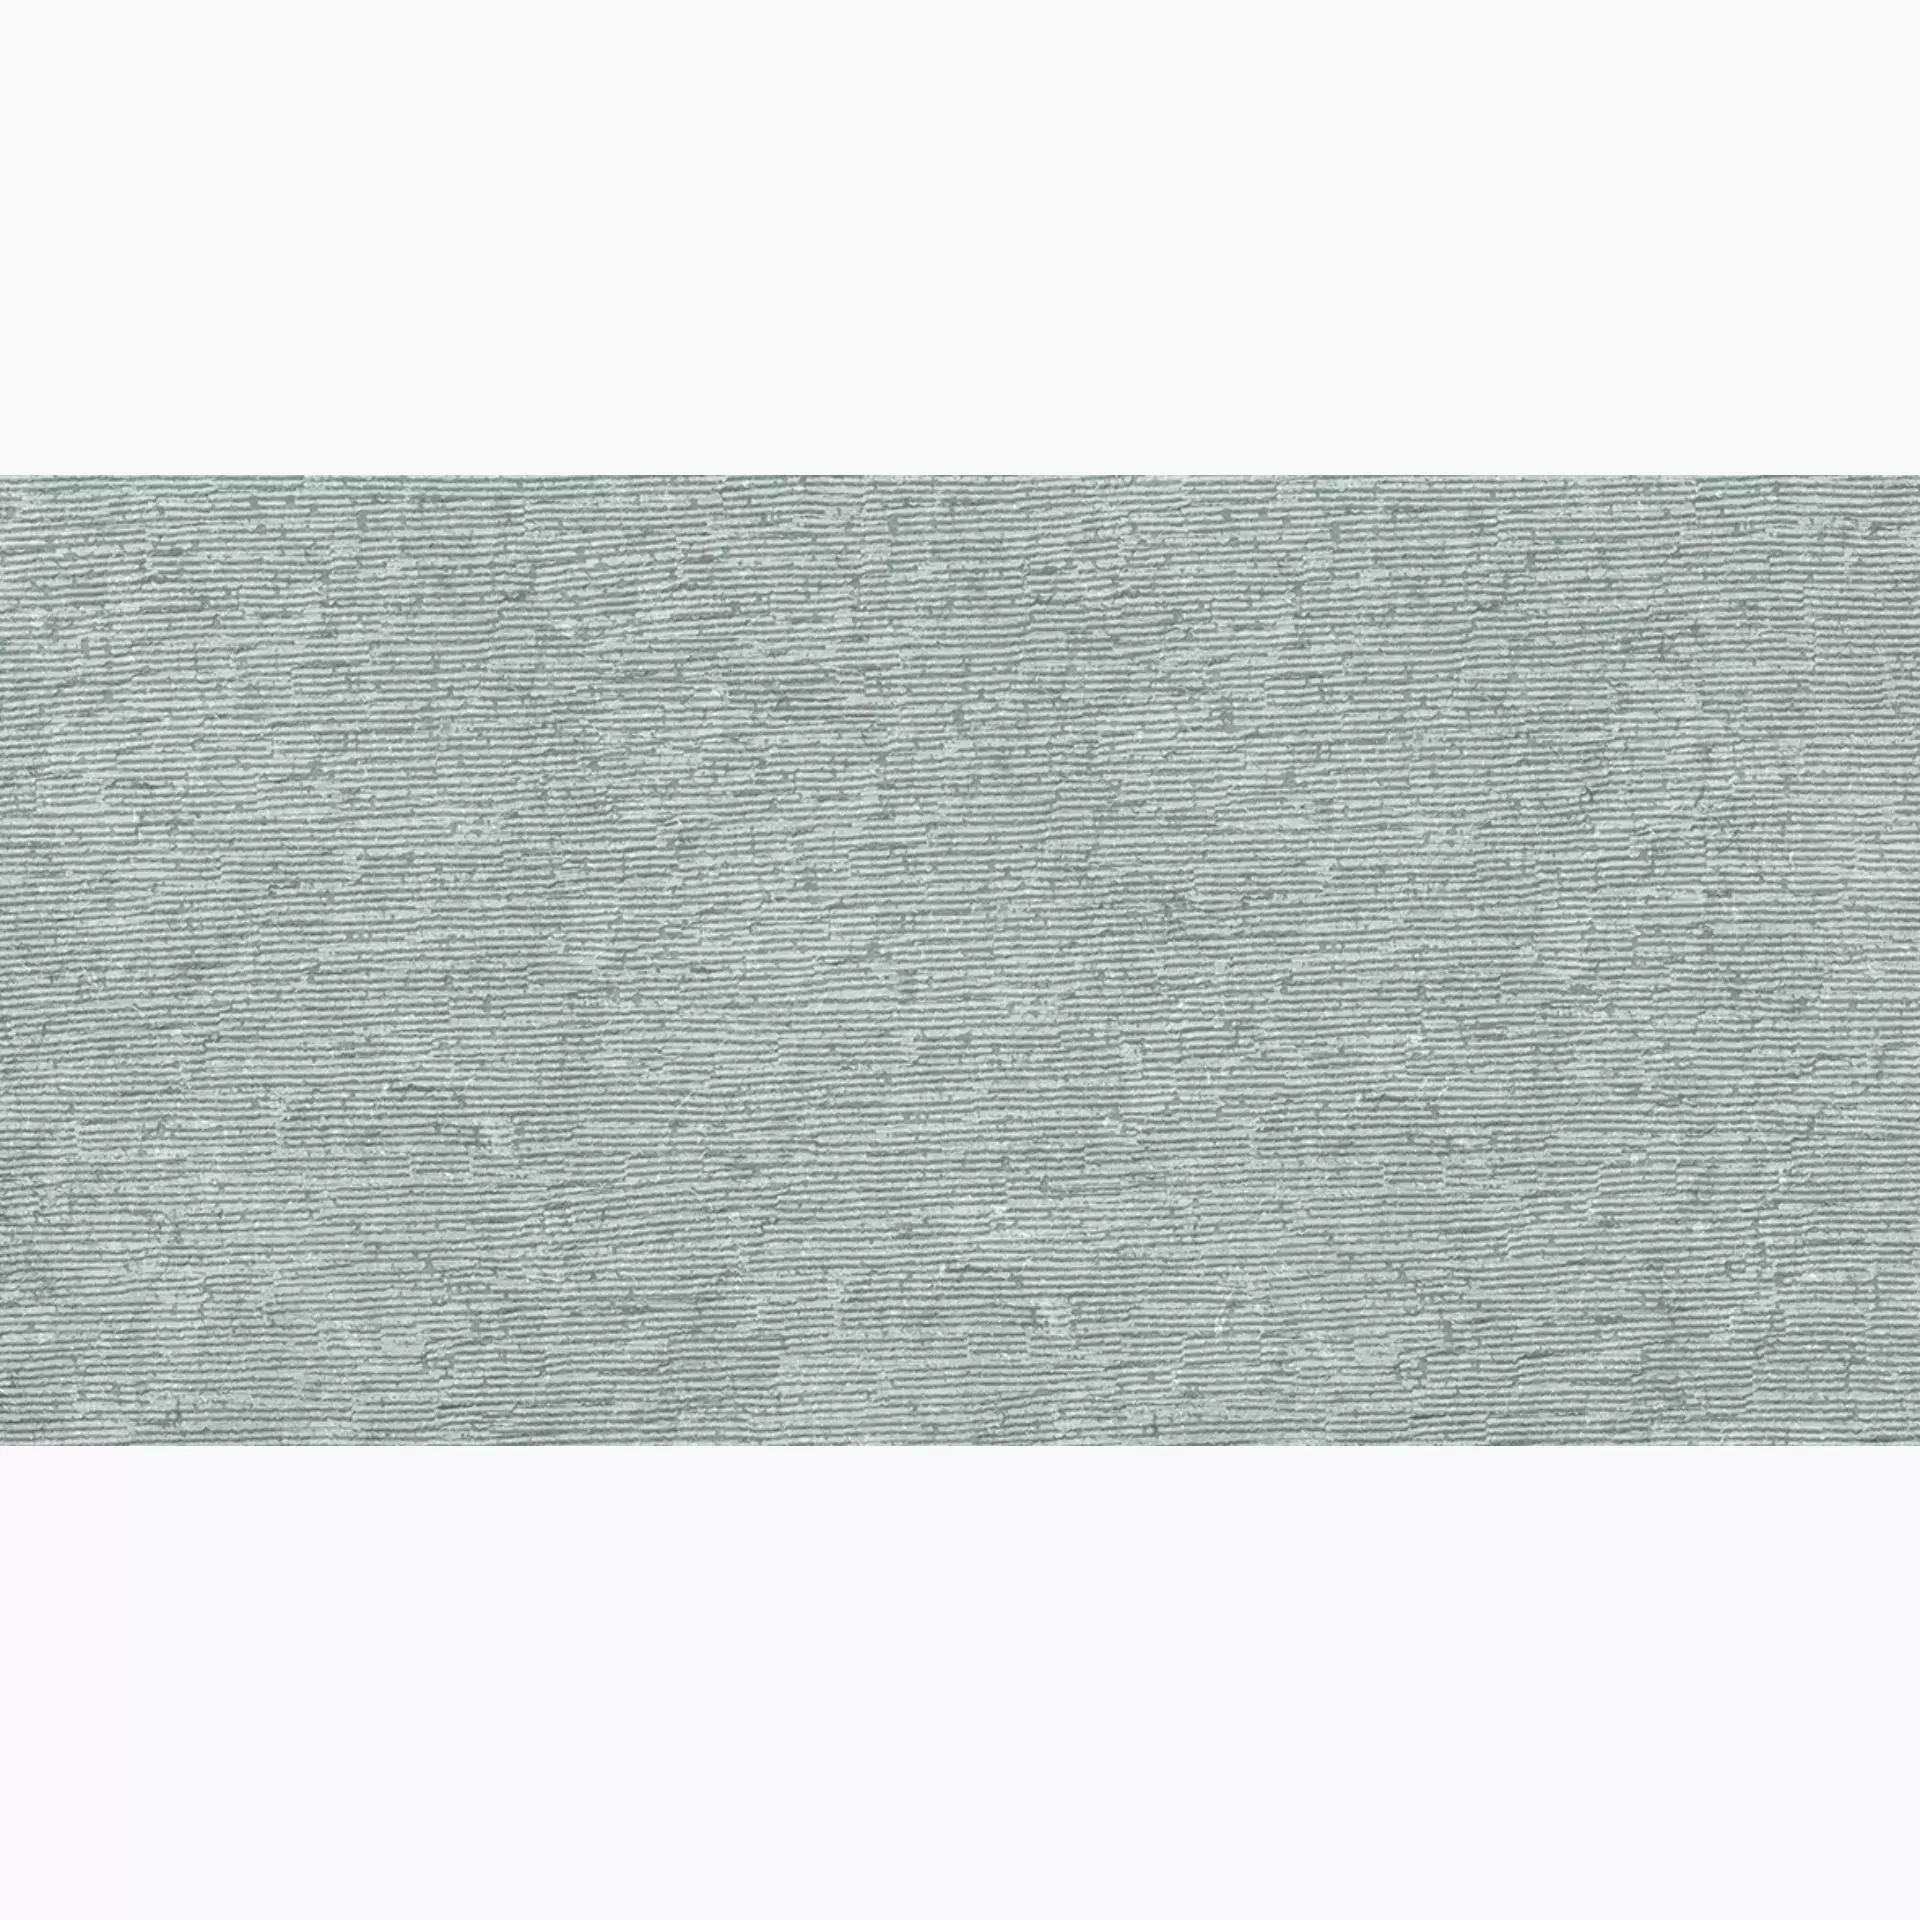 Ergon Stone Talk Rullata Grey Naturale ED5V 60x120cm rectified 9,5mm